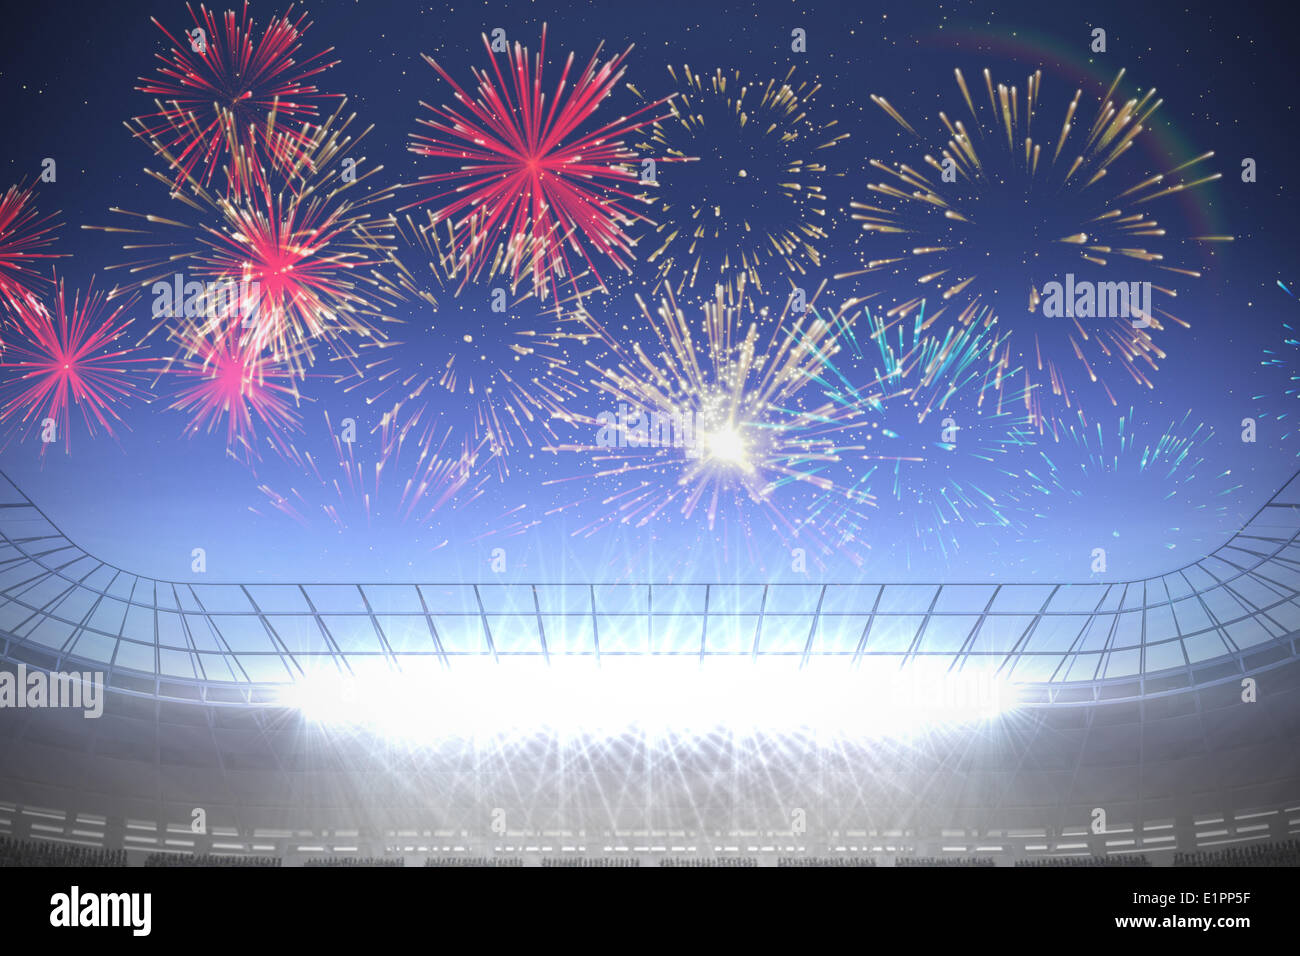 Fireworks exploding over football stadium Stock Photo